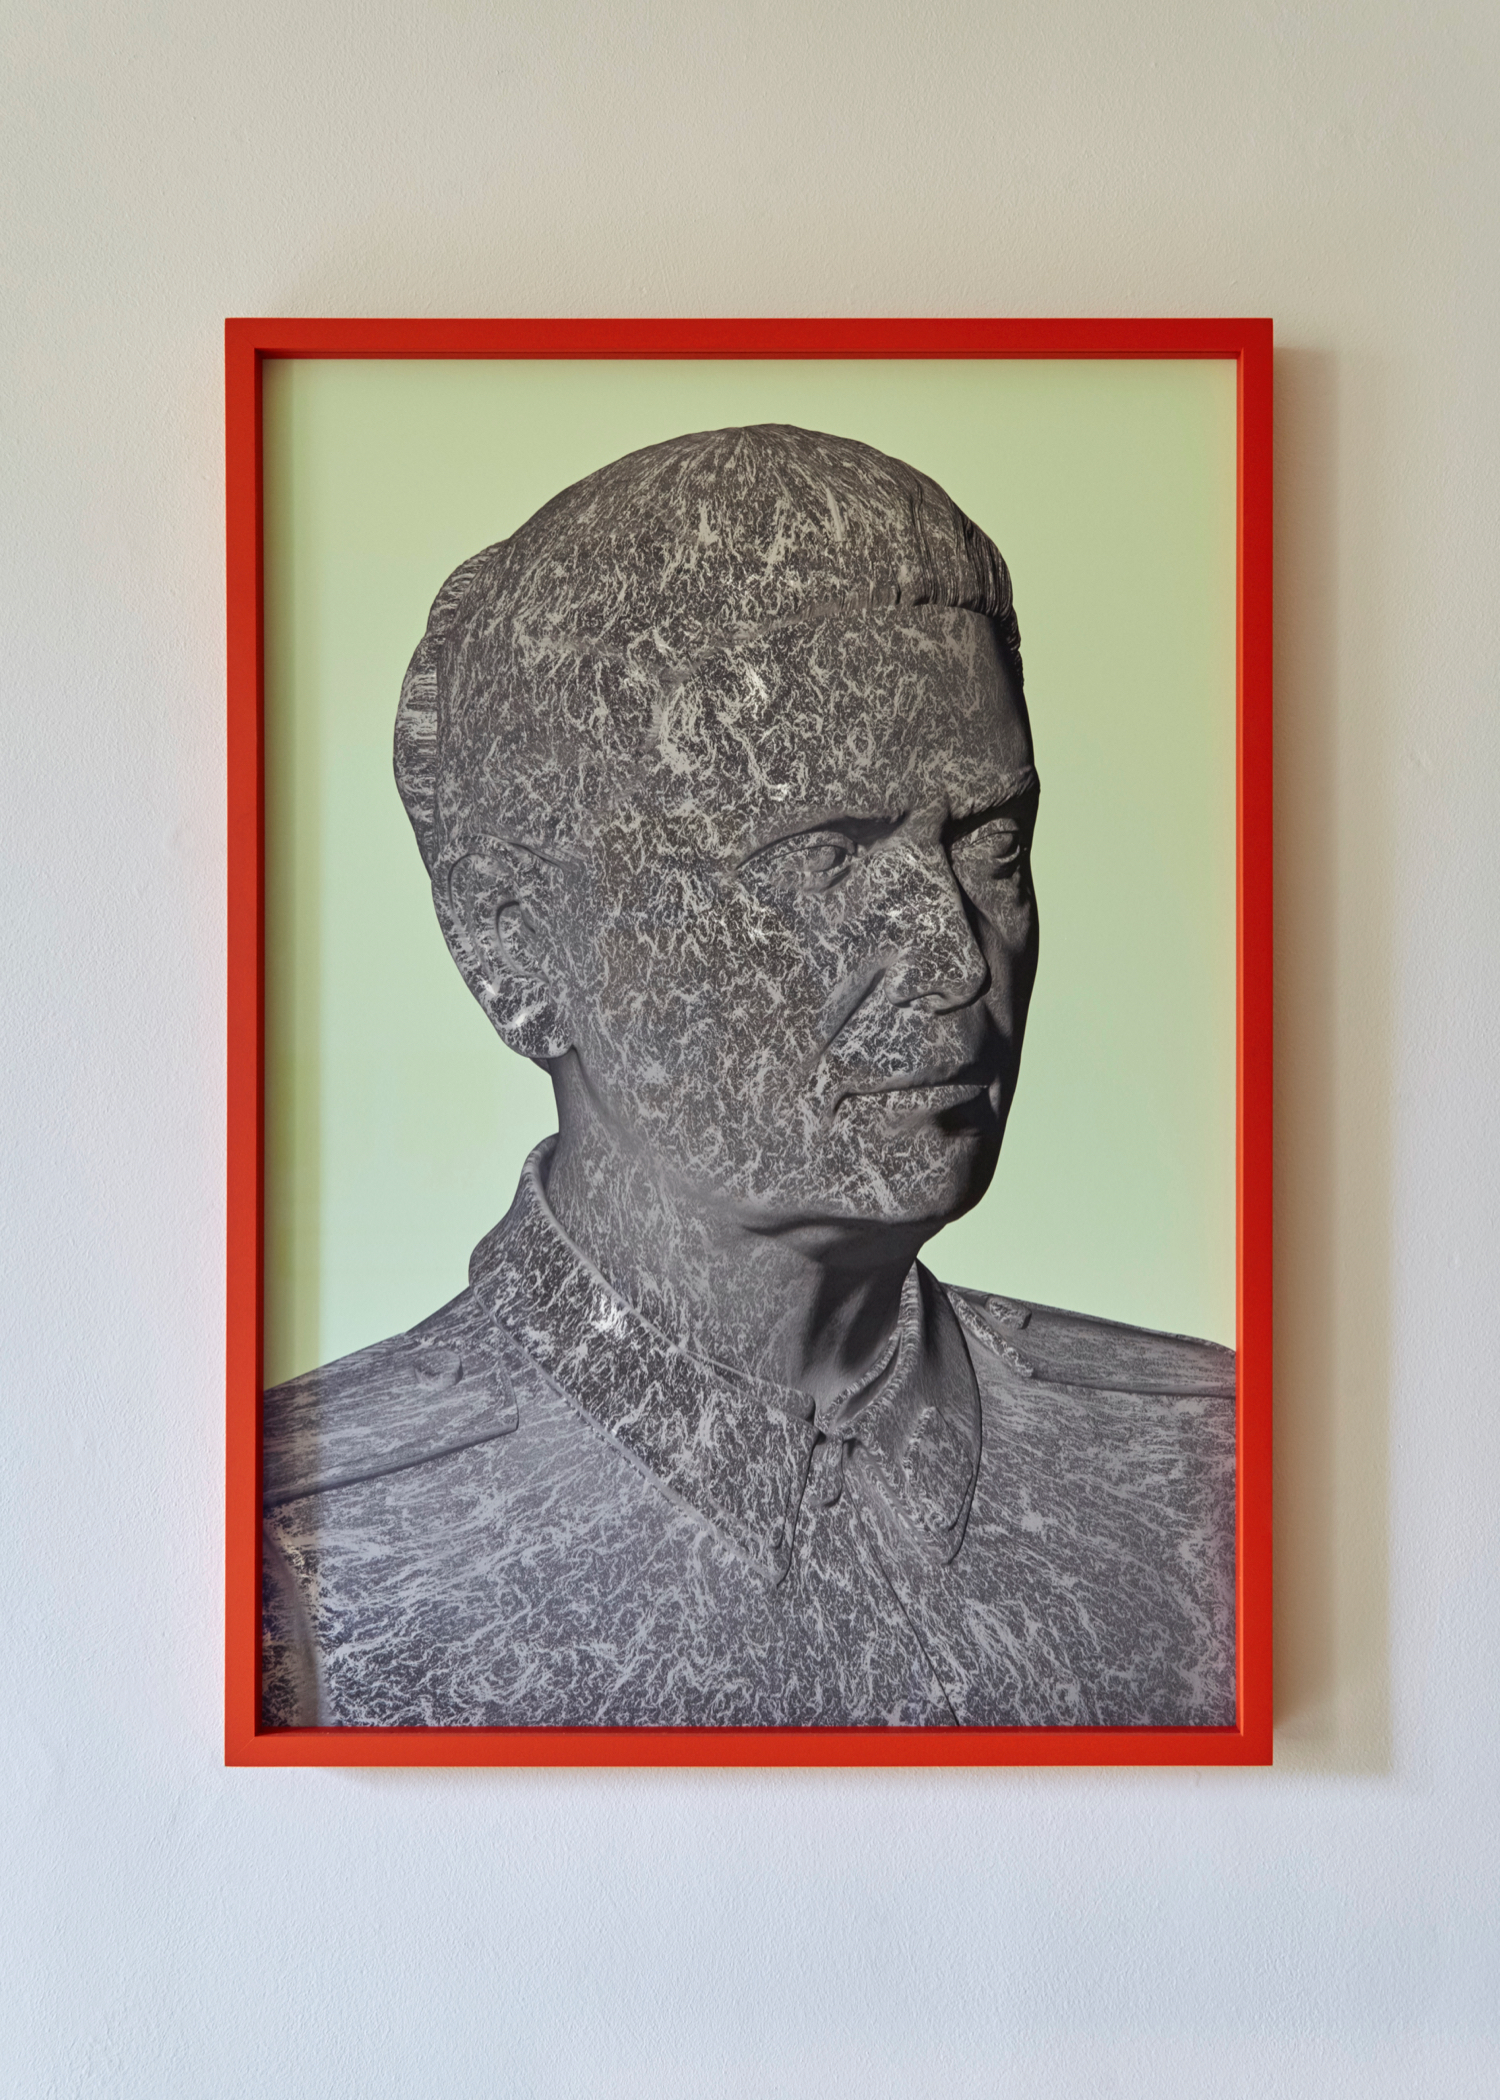 Aleksandra Domanović, ‘Portrait (bump map)’, 2011, inkjet print, red frame, 72 x 52 cm